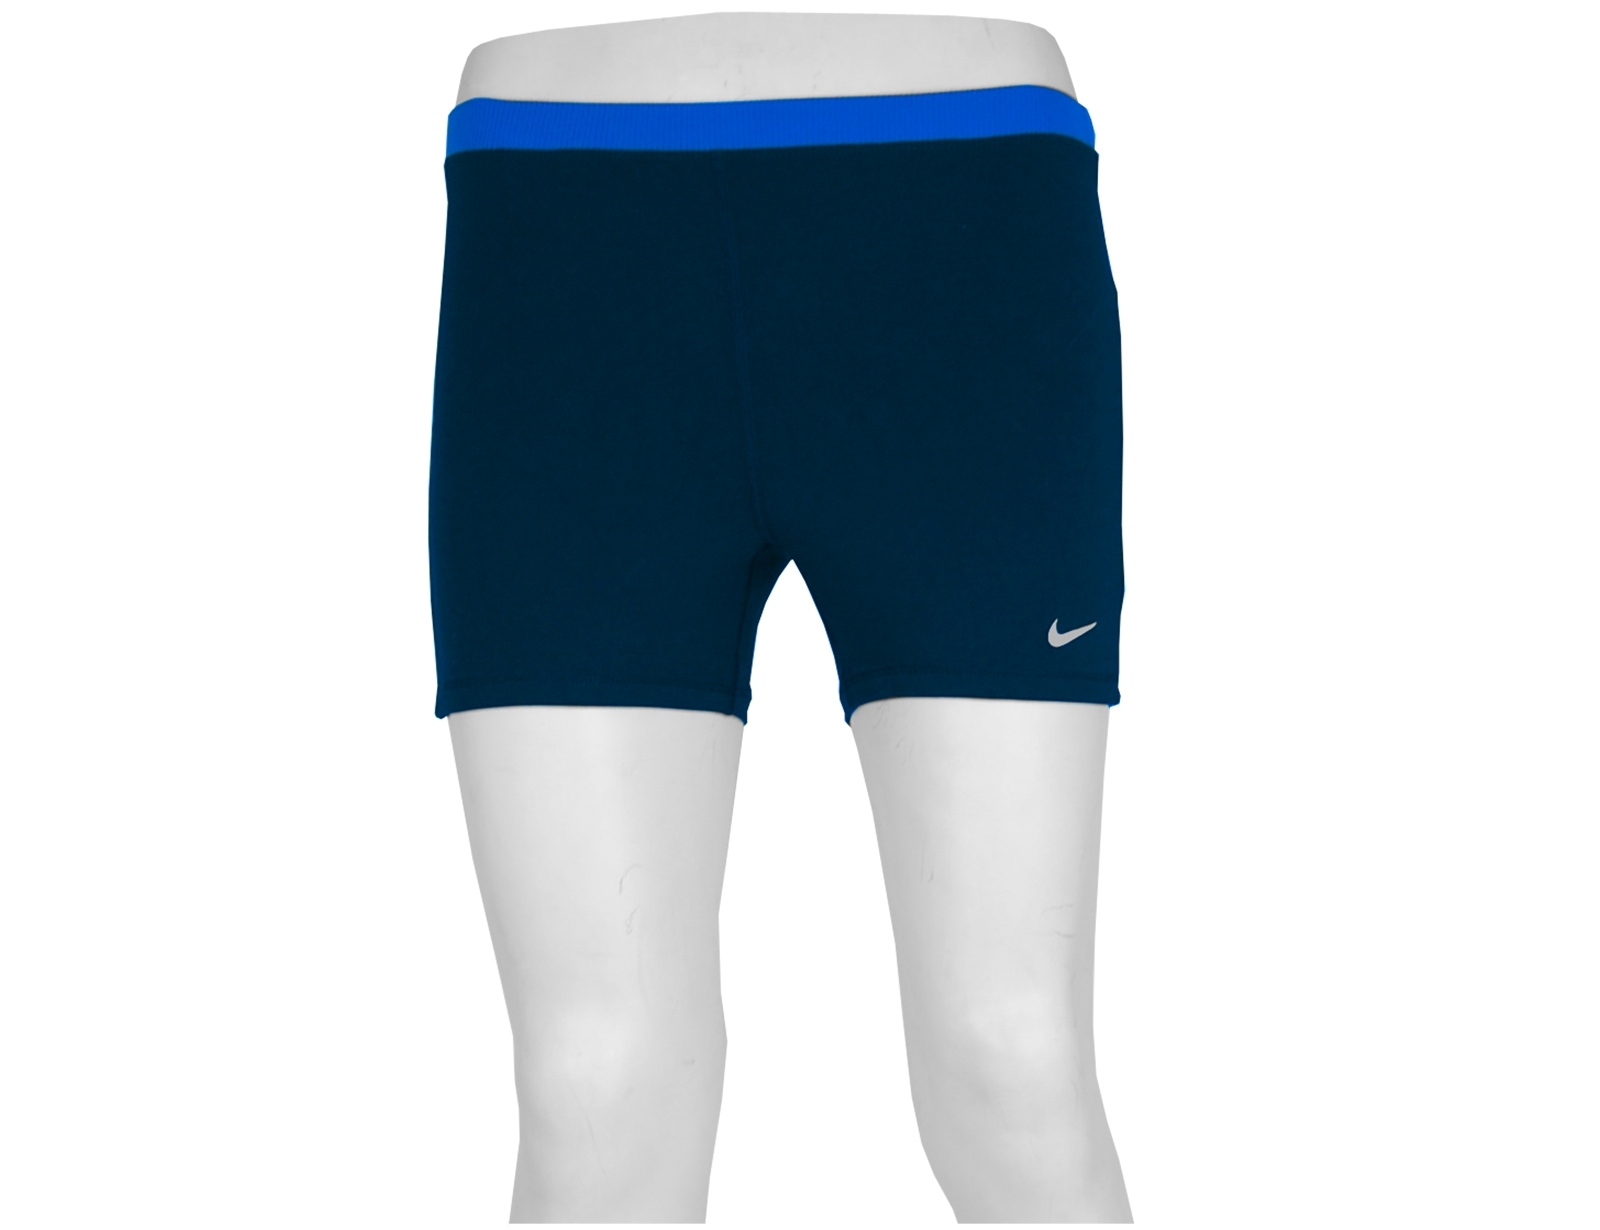 Avantisport - Nike - Tc Tight Short - Nikefit Short